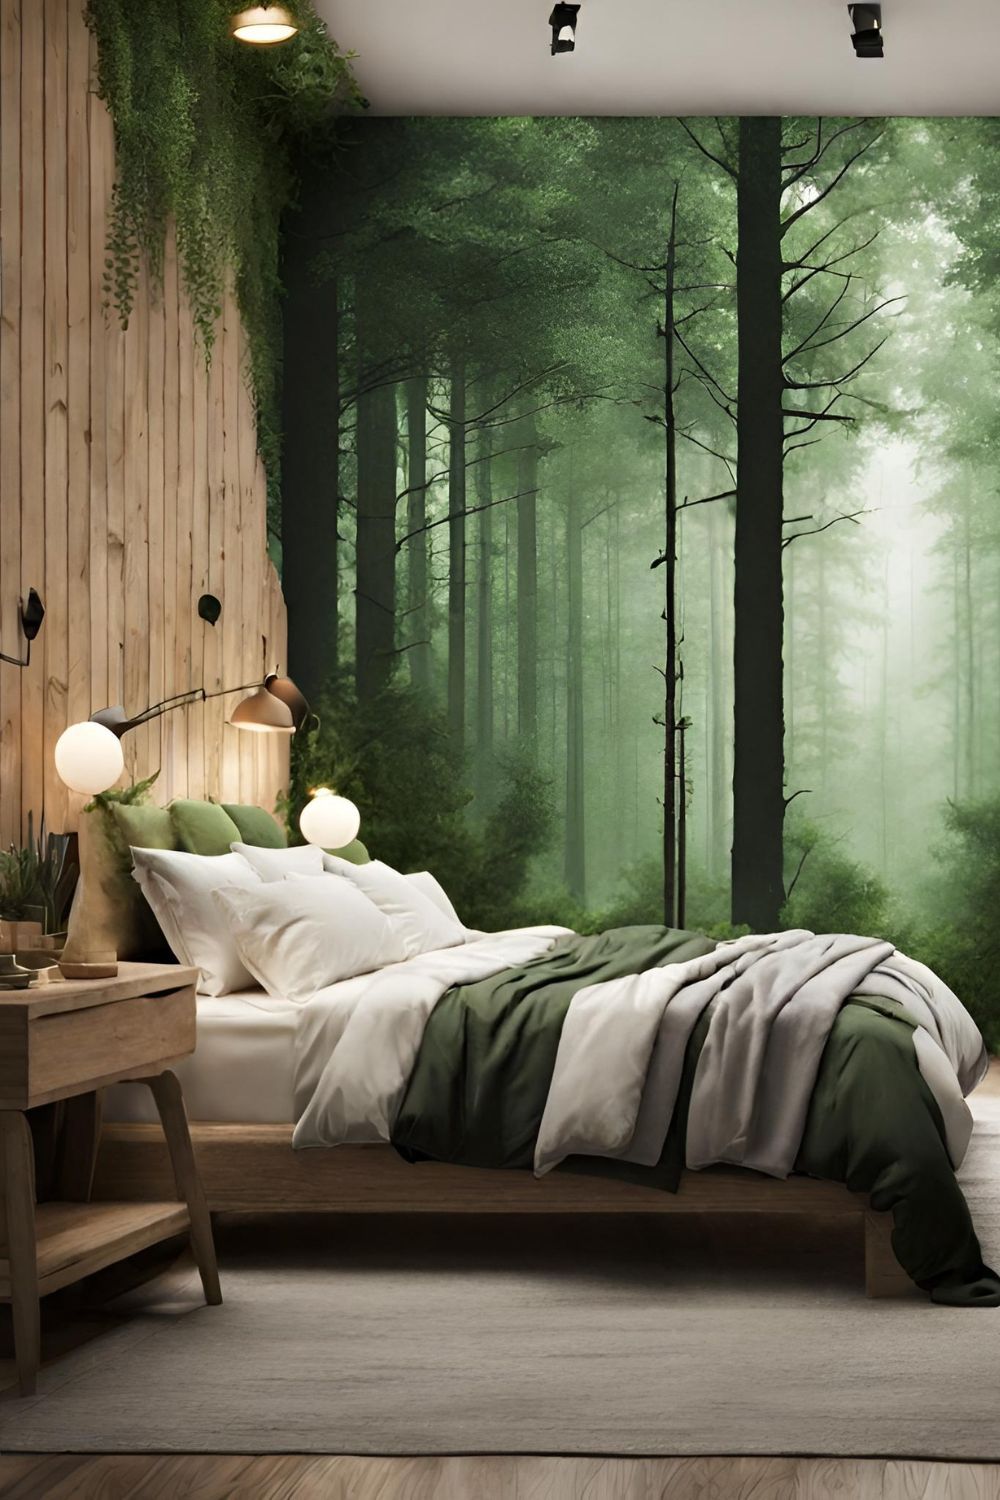 Bedroom Wall Decals Design : Transform Your Bedroom with Stunning Wall Decals Design